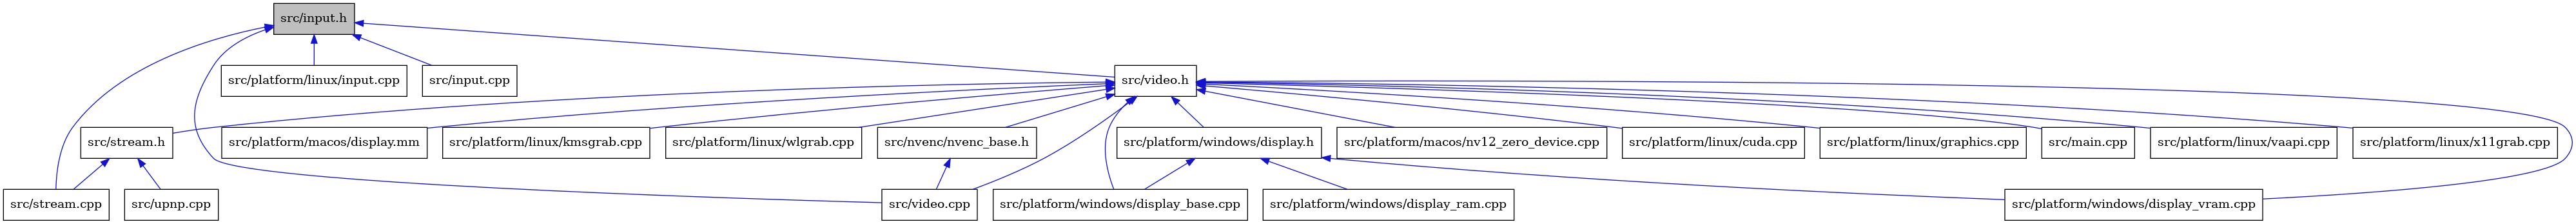 digraph {
    graph [bgcolor="#00000000"]
    node [shape=rectangle style=filled fillcolor="#FFFFFF" font=Helvetica padding=2]
    edge [color="#1414CE"]
    "22" [label="src/upnp.cpp" tooltip="src/upnp.cpp"]
    "14" [label="src/platform/linux/x11grab.cpp" tooltip="src/platform/linux/x11grab.cpp"]
    "21" [label="src/stream.h" tooltip="src/stream.h"]
    "15" [label="src/platform/macos/display.mm" tooltip="src/platform/macos/display.mm"]
    "11" [label="src/platform/linux/kmsgrab.cpp" tooltip="src/platform/linux/kmsgrab.cpp"]
    "1" [label="src/input.h" tooltip="src/input.h" fillcolor="#BFBFBF"]
    "7" [label="src/nvenc/nvenc_base.h" tooltip="src/nvenc/nvenc_base.h"]
    "13" [label="src/platform/linux/wlgrab.cpp" tooltip="src/platform/linux/wlgrab.cpp"]
    "3" [label="src/platform/linux/input.cpp" tooltip="src/platform/linux/input.cpp"]
    "17" [label="src/platform/windows/display.h" tooltip="src/platform/windows/display.h"]
    "19" [label="src/platform/windows/display_base.cpp" tooltip="src/platform/windows/display_base.cpp"]
    "16" [label="src/platform/macos/nv12_zero_device.cpp" tooltip="src/platform/macos/nv12_zero_device.cpp"]
    "2" [label="src/input.cpp" tooltip="src/input.cpp"]
    "10" [label="src/platform/linux/cuda.cpp" tooltip="src/platform/linux/cuda.cpp"]
    "20" [label="src/platform/windows/display_vram.cpp" tooltip="src/platform/windows/display_vram.cpp"]
    "5" [label="src/video.h" tooltip="src/video.h"]
    "9" [label="src/platform/linux/graphics.cpp" tooltip="src/platform/linux/graphics.cpp"]
    "4" [label="src/stream.cpp" tooltip="src/stream.cpp"]
    "18" [label="src/platform/windows/display_ram.cpp" tooltip="src/platform/windows/display_ram.cpp"]
    "6" [label="src/main.cpp" tooltip="src/main.cpp"]
    "8" [label="src/video.cpp" tooltip="src/video.cpp"]
    "12" [label="src/platform/linux/vaapi.cpp" tooltip="src/platform/linux/vaapi.cpp"]
    "21" -> "4" [dir=back tooltip="include"]
    "21" -> "22" [dir=back tooltip="include"]
    "1" -> "2" [dir=back tooltip="include"]
    "1" -> "3" [dir=back tooltip="include"]
    "1" -> "4" [dir=back tooltip="include"]
    "1" -> "5" [dir=back tooltip="include"]
    "1" -> "8" [dir=back tooltip="include"]
    "7" -> "8" [dir=back tooltip="include"]
    "17" -> "18" [dir=back tooltip="include"]
    "17" -> "19" [dir=back tooltip="include"]
    "17" -> "20" [dir=back tooltip="include"]
    "5" -> "6" [dir=back tooltip="include"]
    "5" -> "7" [dir=back tooltip="include"]
    "5" -> "9" [dir=back tooltip="include"]
    "5" -> "10" [dir=back tooltip="include"]
    "5" -> "11" [dir=back tooltip="include"]
    "5" -> "12" [dir=back tooltip="include"]
    "5" -> "13" [dir=back tooltip="include"]
    "5" -> "14" [dir=back tooltip="include"]
    "5" -> "15" [dir=back tooltip="include"]
    "5" -> "16" [dir=back tooltip="include"]
    "5" -> "17" [dir=back tooltip="include"]
    "5" -> "19" [dir=back tooltip="include"]
    "5" -> "20" [dir=back tooltip="include"]
    "5" -> "21" [dir=back tooltip="include"]
    "5" -> "8" [dir=back tooltip="include"]
}